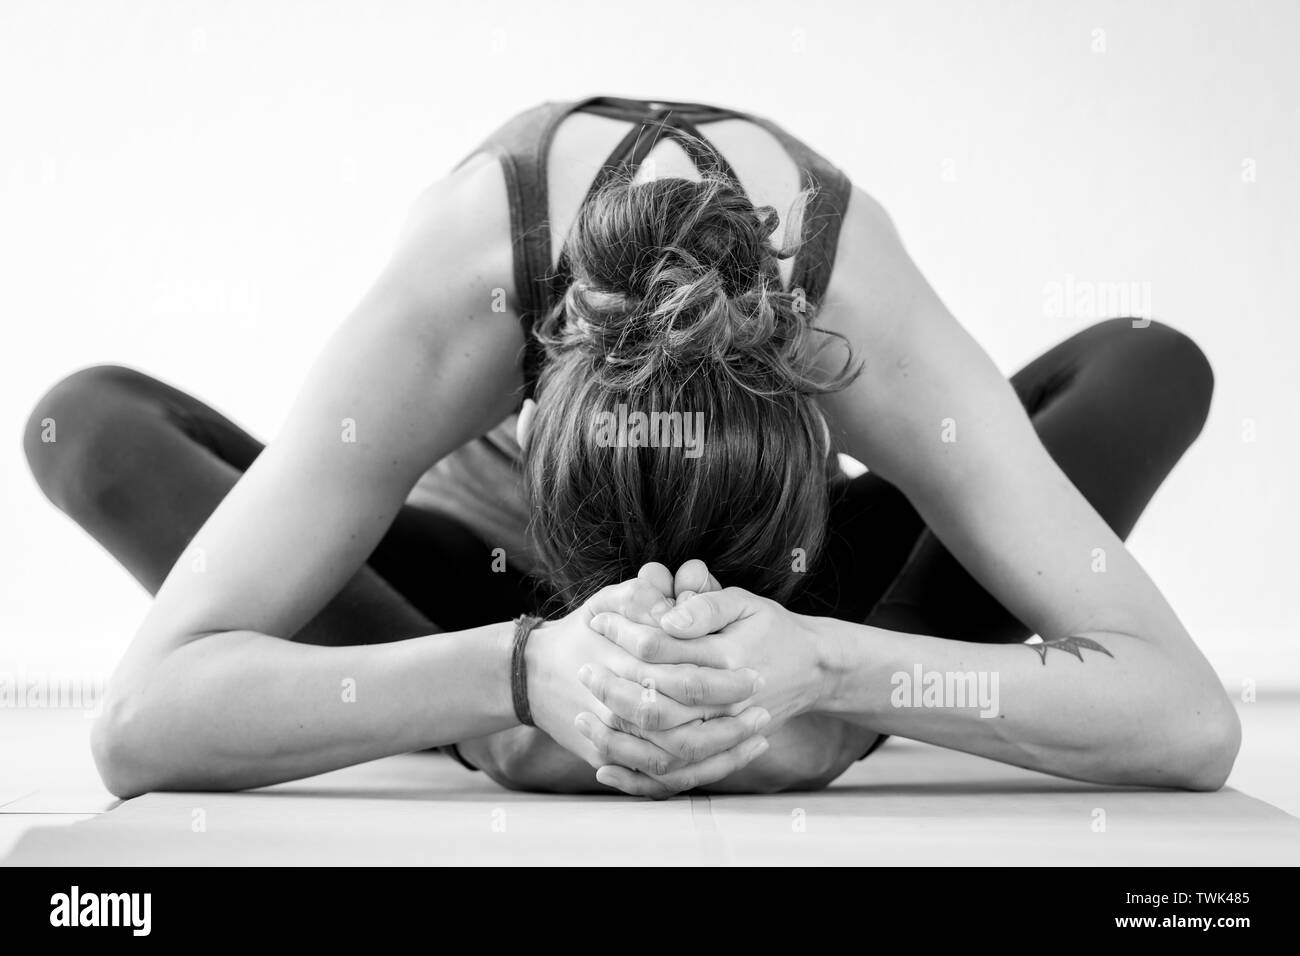 A brunette European woman practices the Star Pose or Tarasana yoga posture. Black and white, horizontal close-up view. Stock Photo